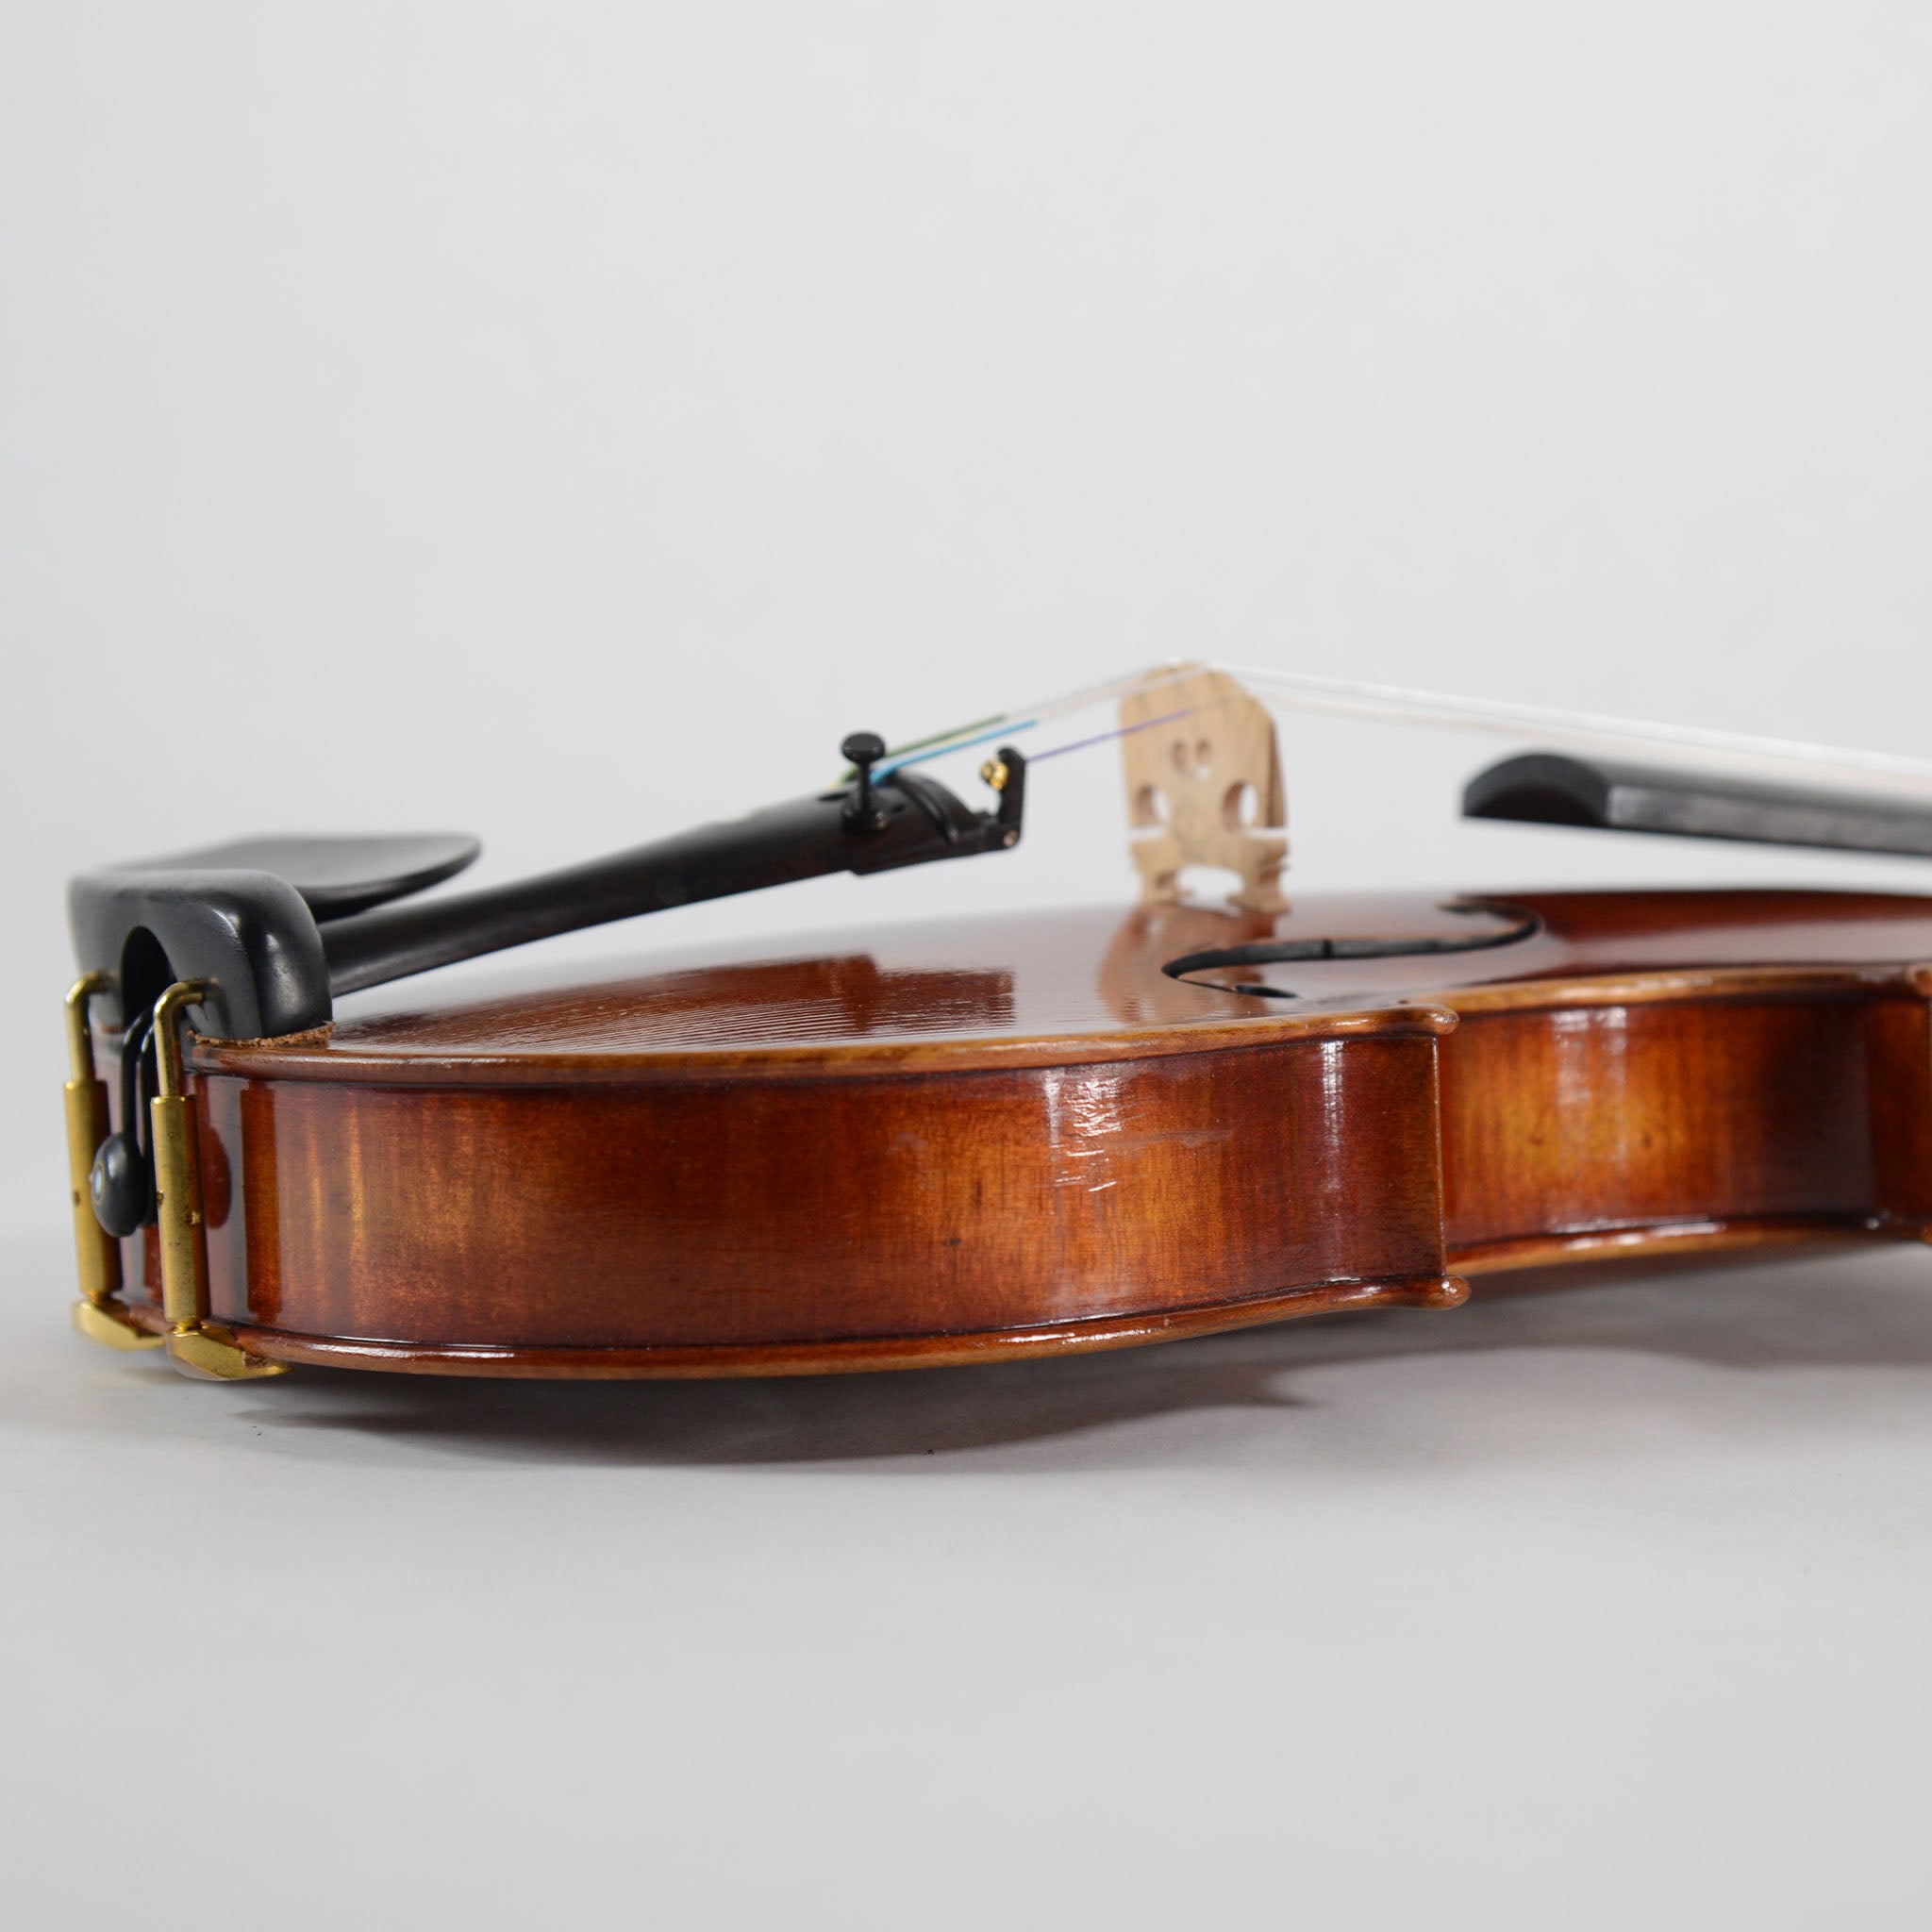 Pre-owned Ming Jiang Zhu 903 3/4 Size Violin